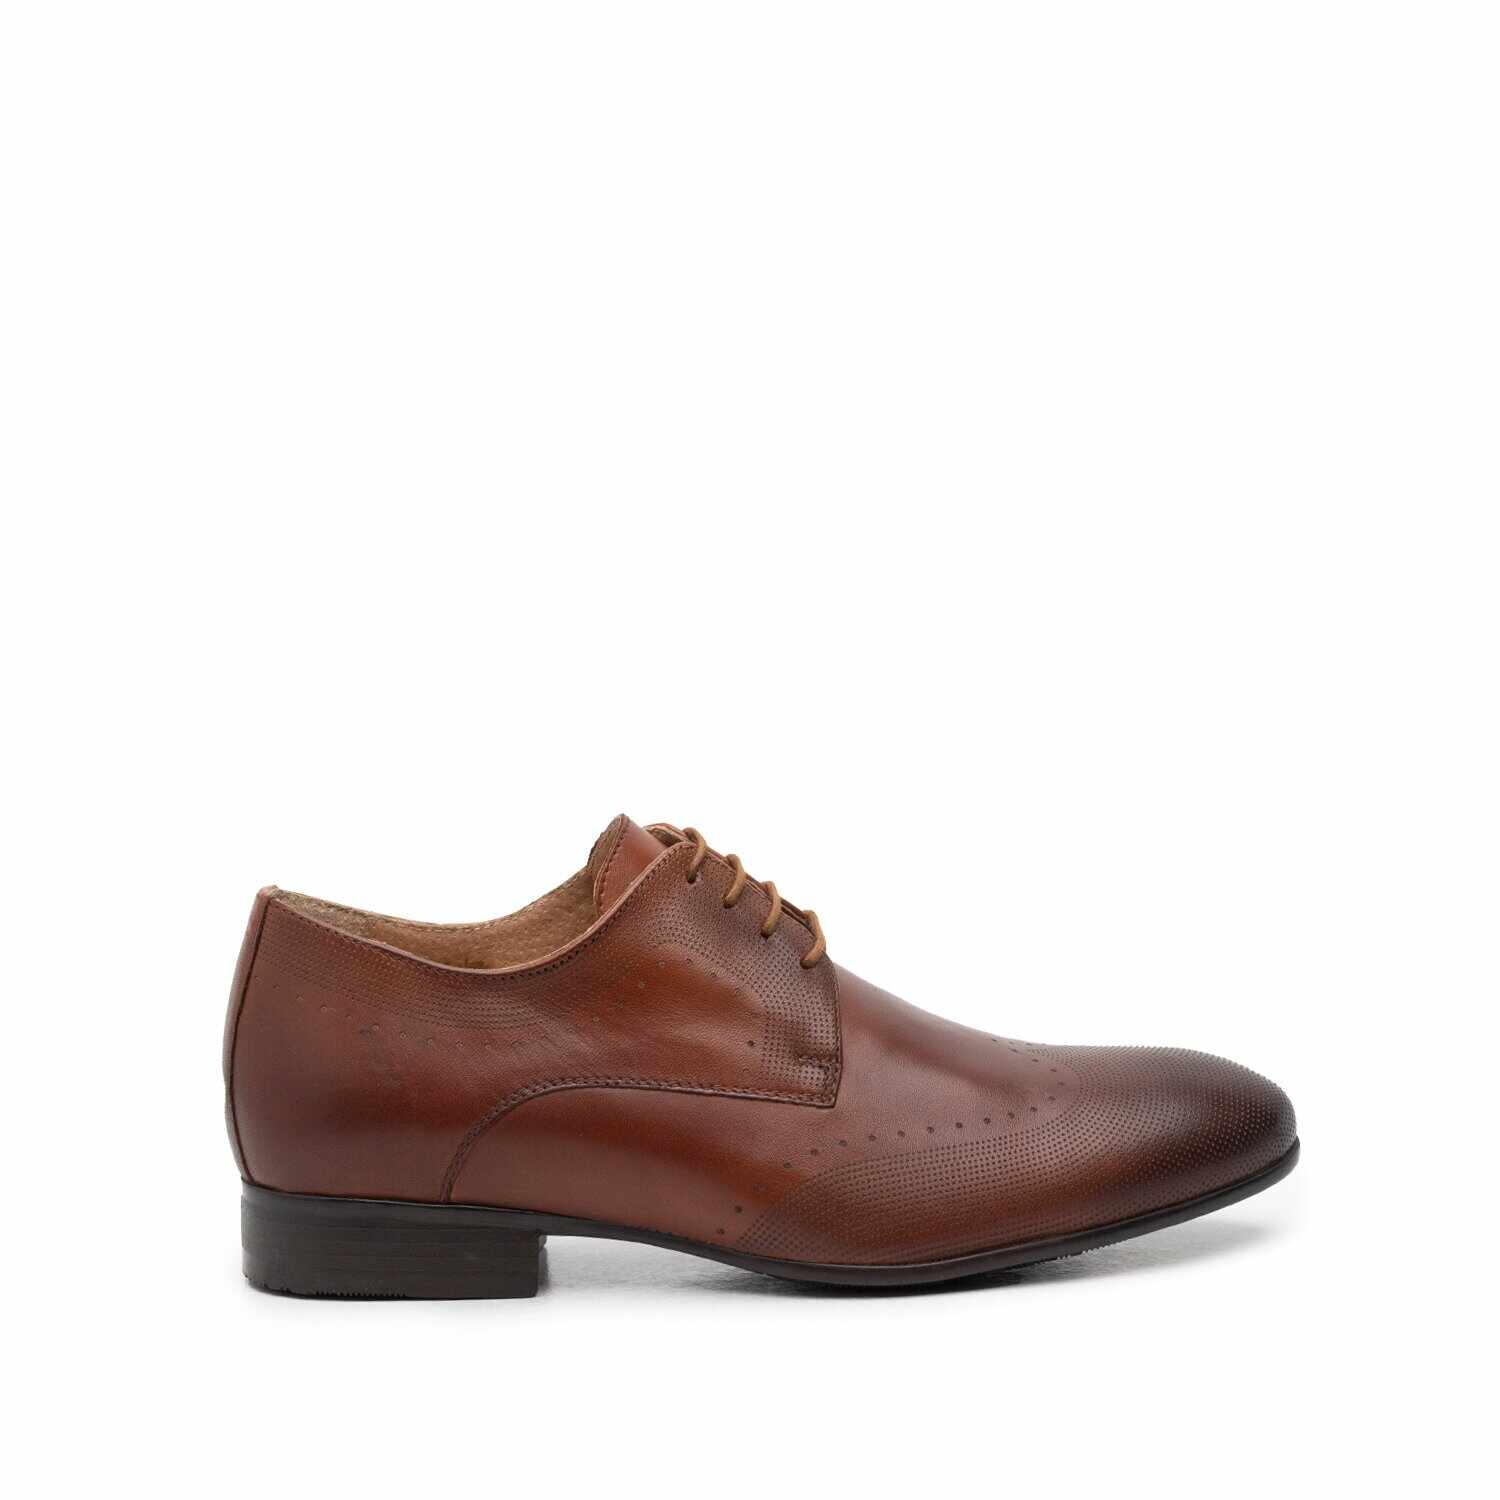 Pantofi eleganti barbati din piele naturala, Leofex - 889 cognac box